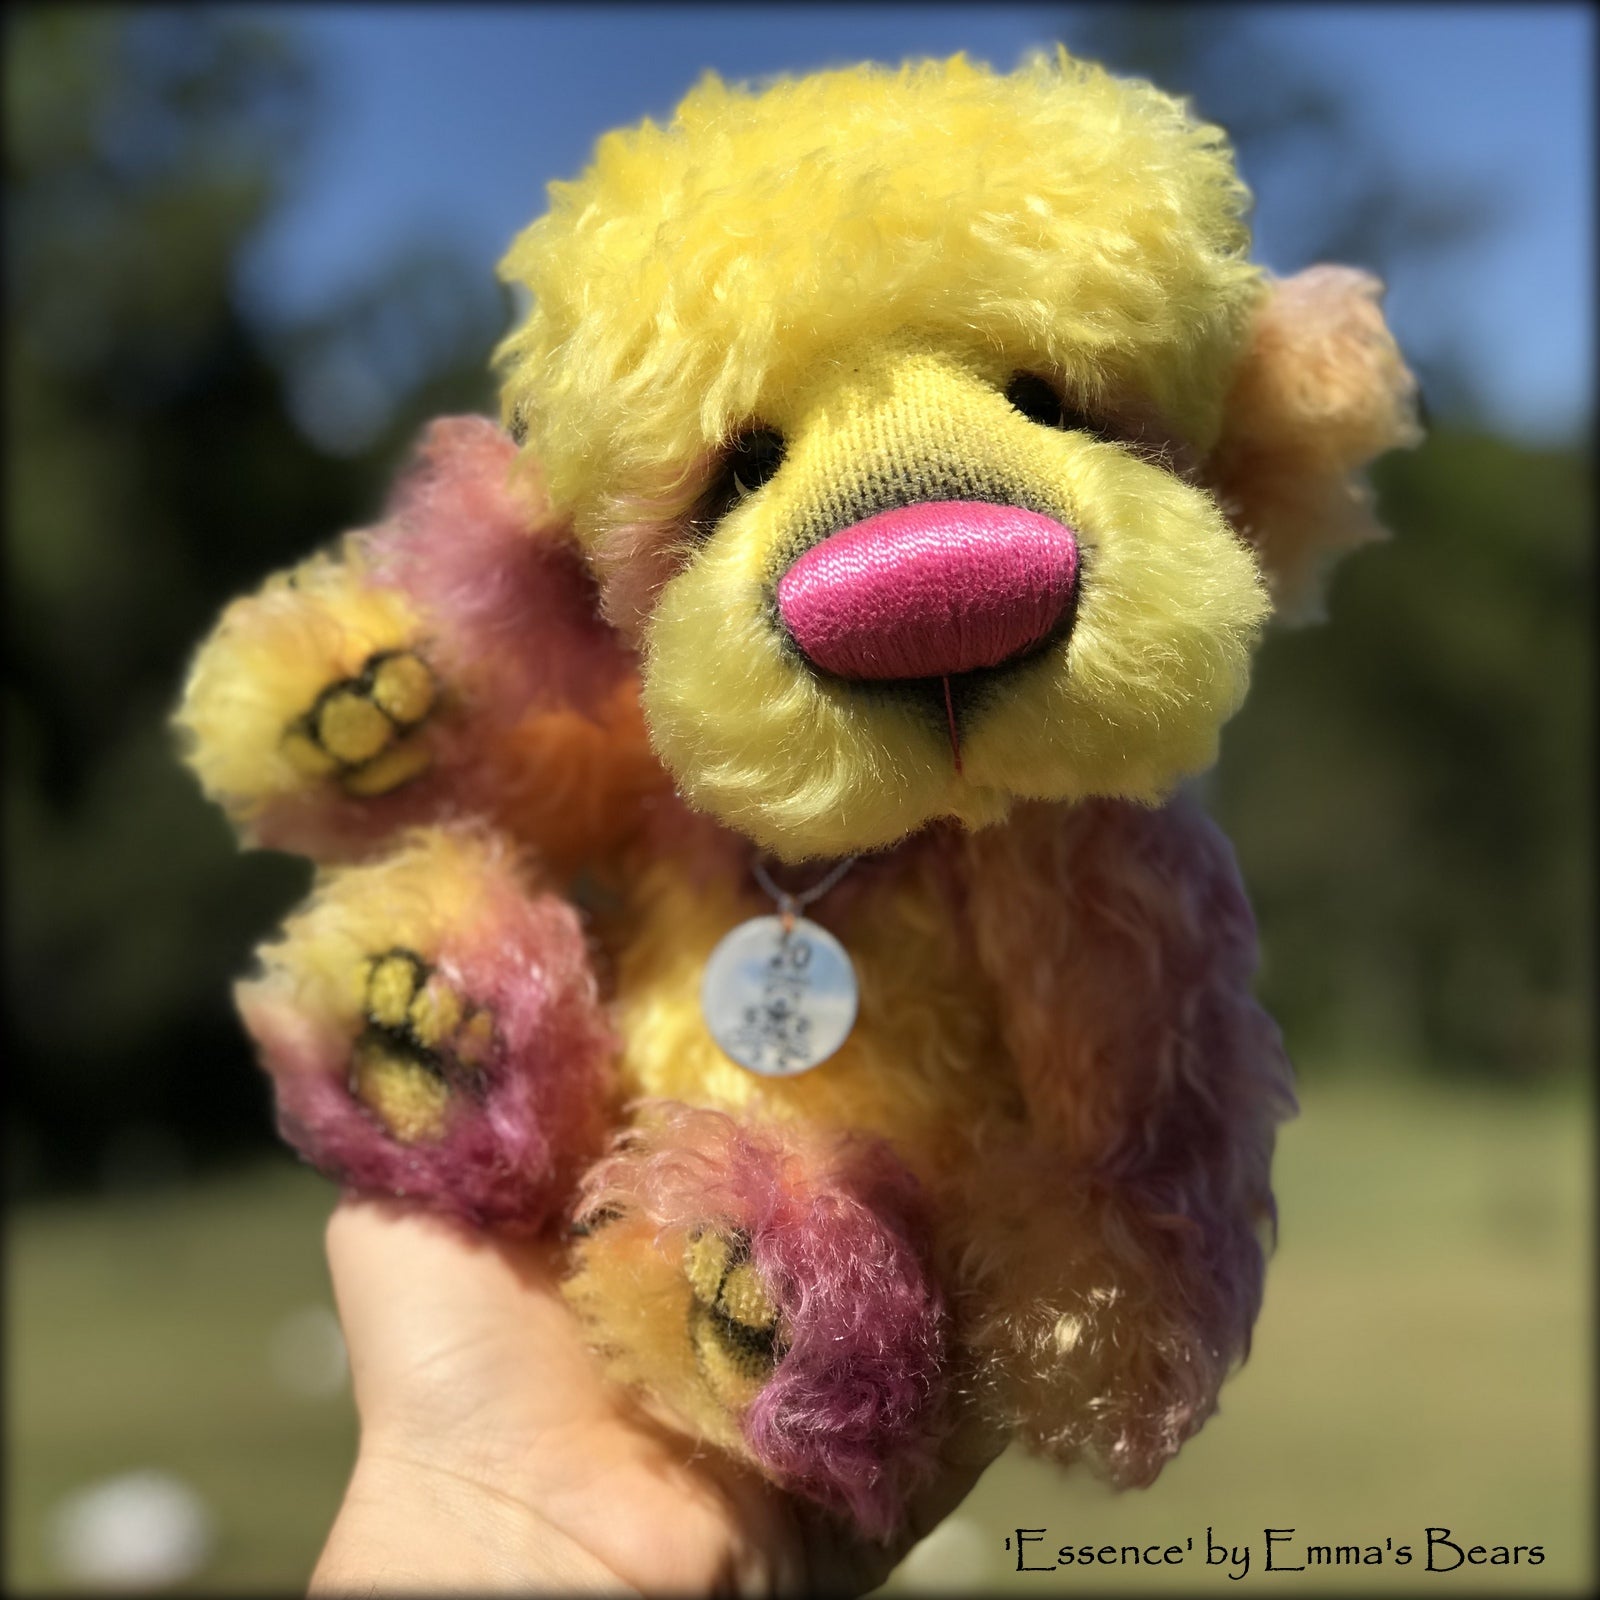 Essence - 20 Years of Emma's Bears Commemorative Teddy - OOAK in a series